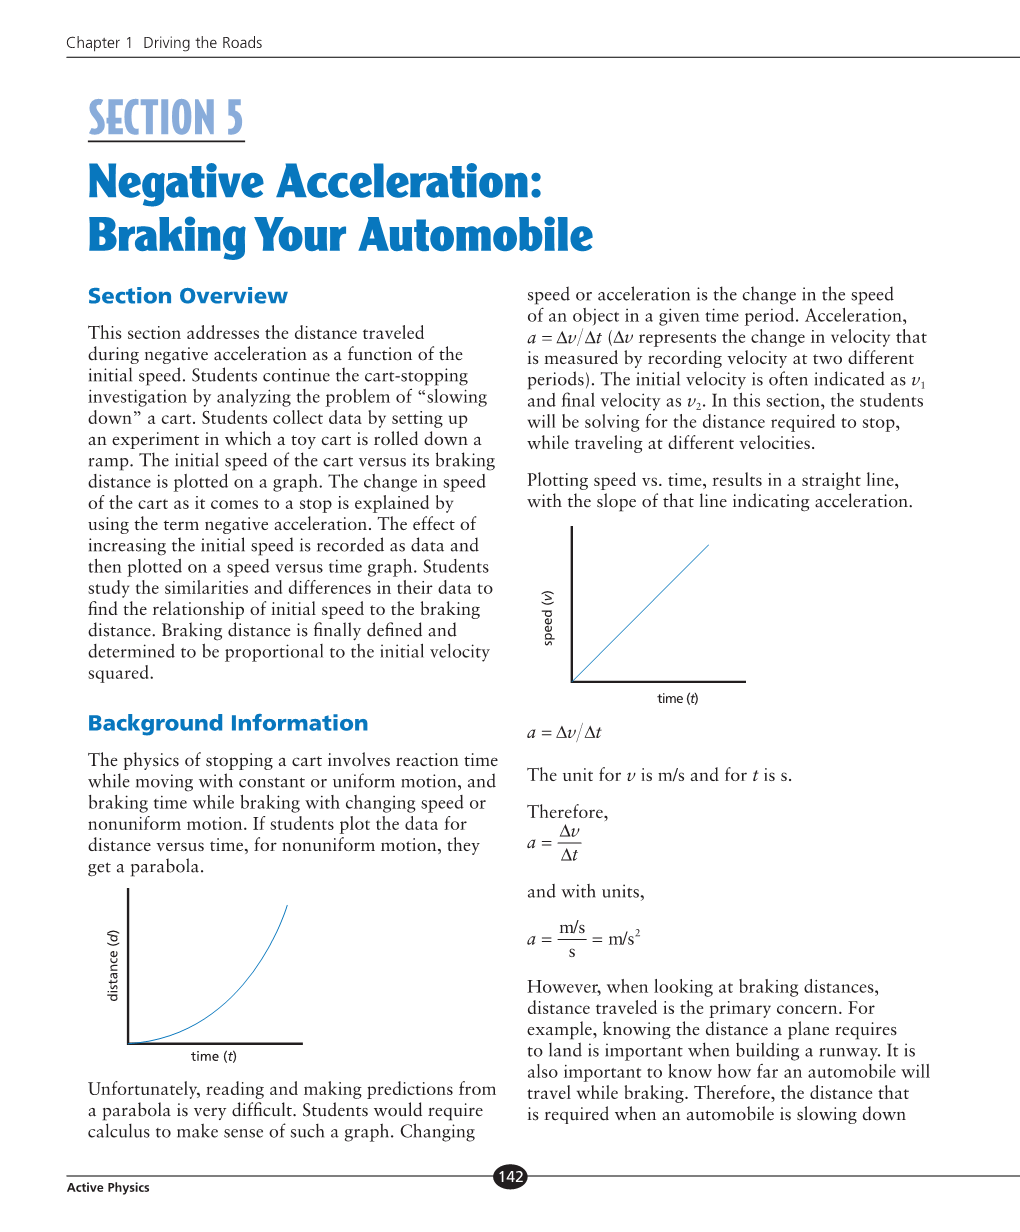 SECTION 5 Negative Acceleration: Braking Your Automobile